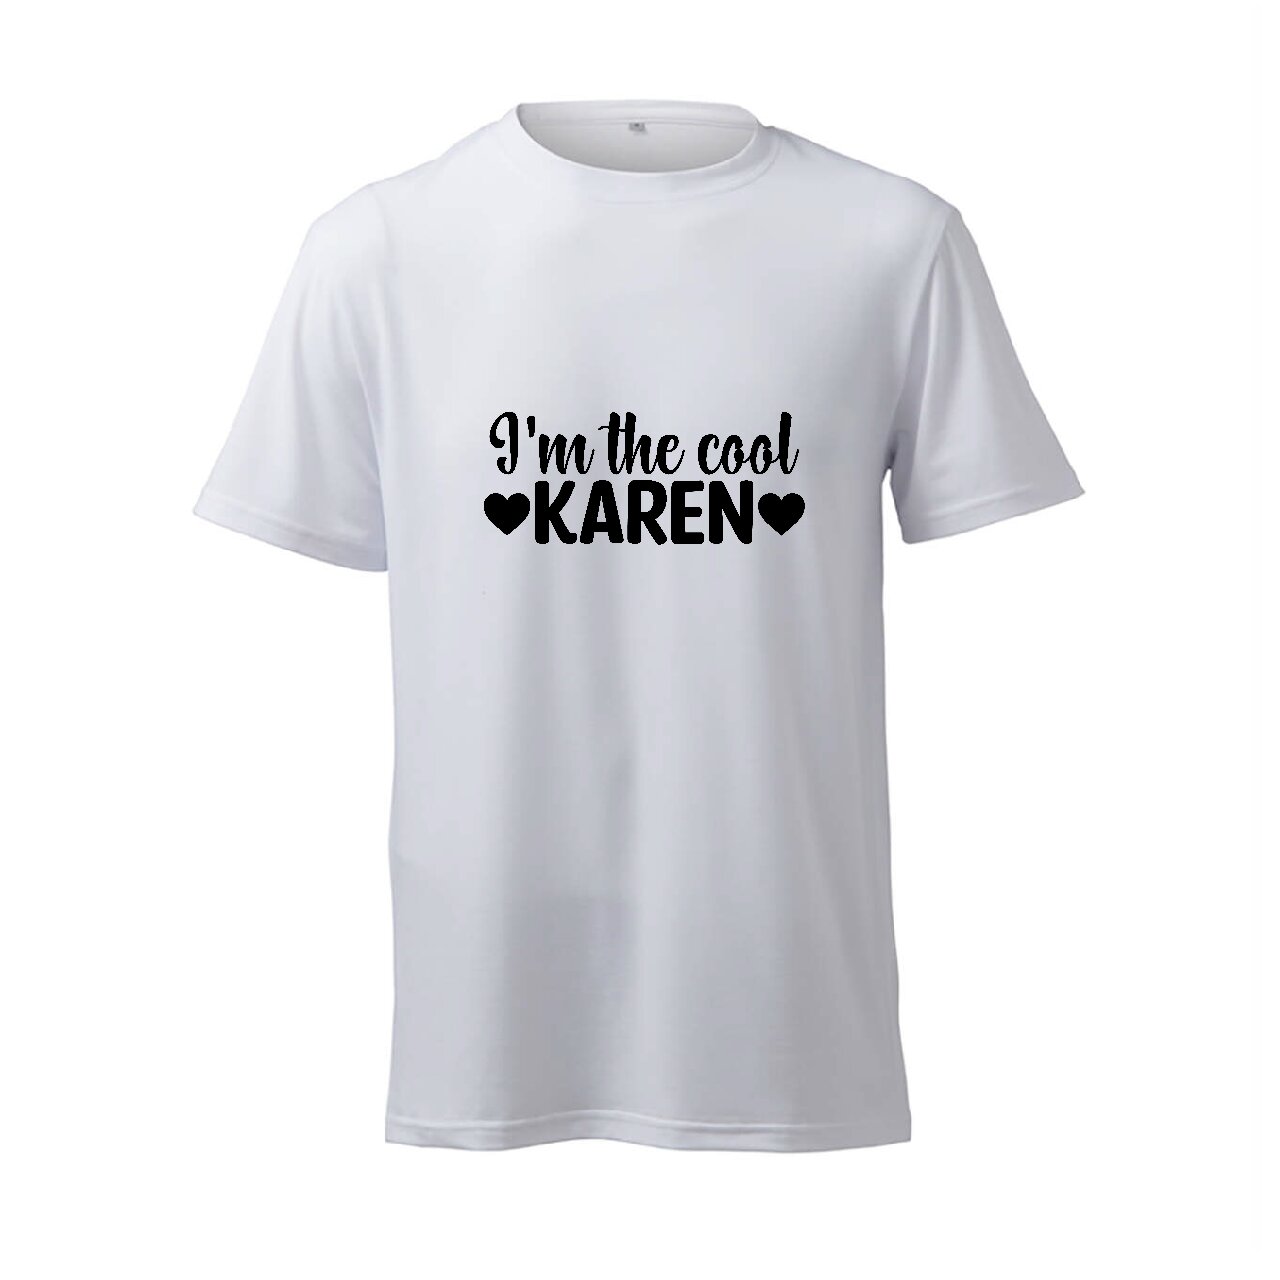 I'm The Cool Karen - T-Shirt